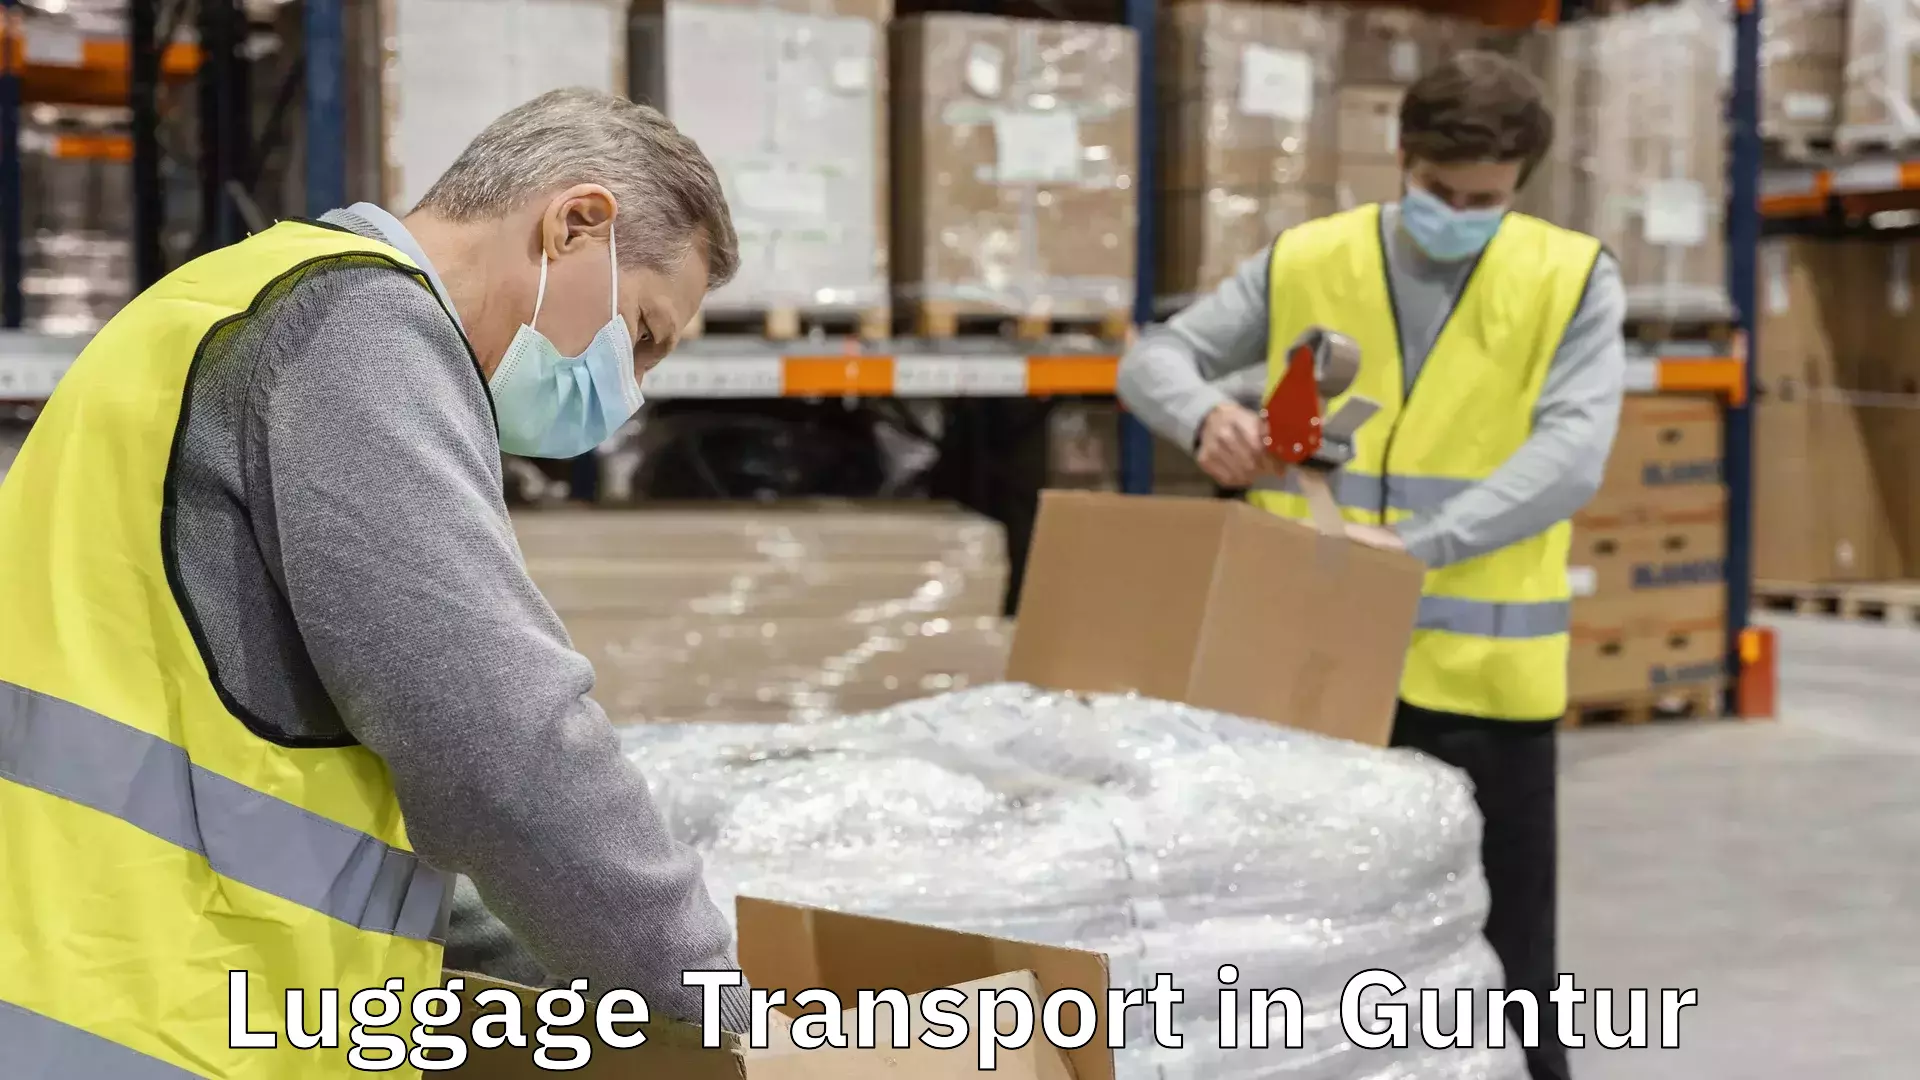 Luggage shipment processing in Guntur